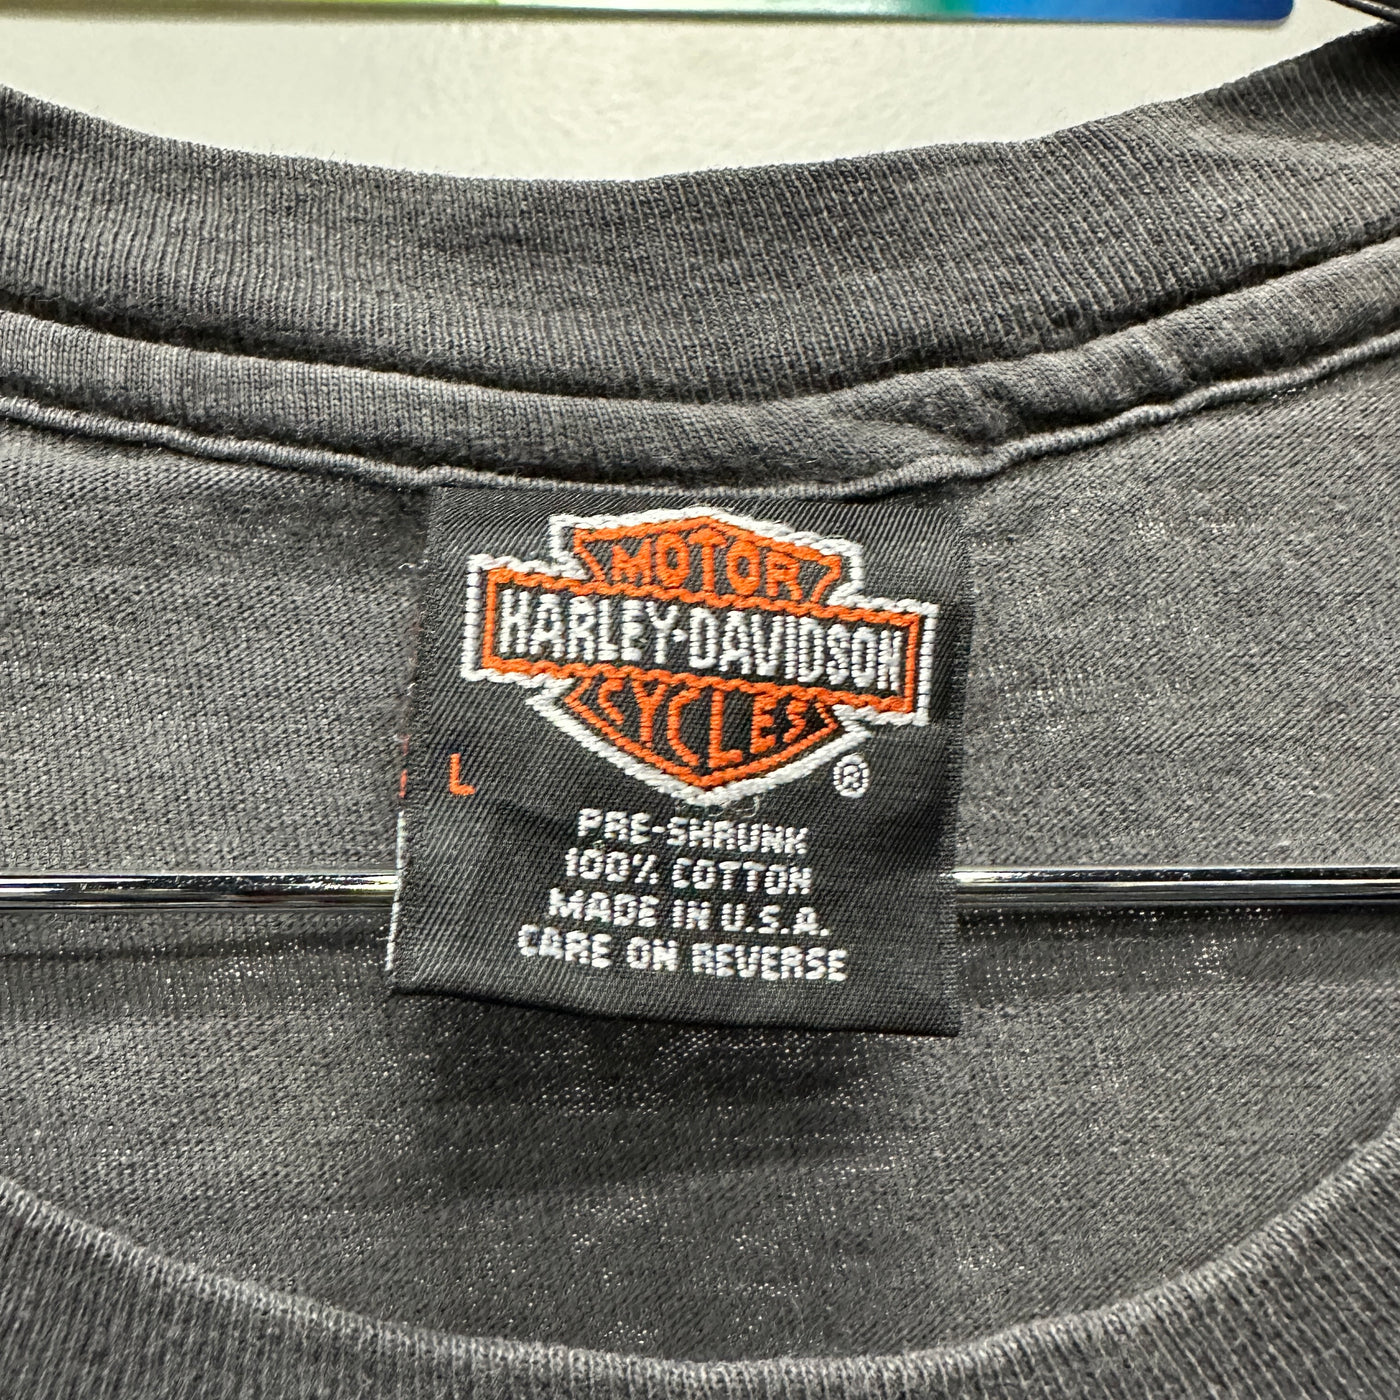 '90s Bourbon St. Louisiana Black Harley Davidson T-shirt sz L